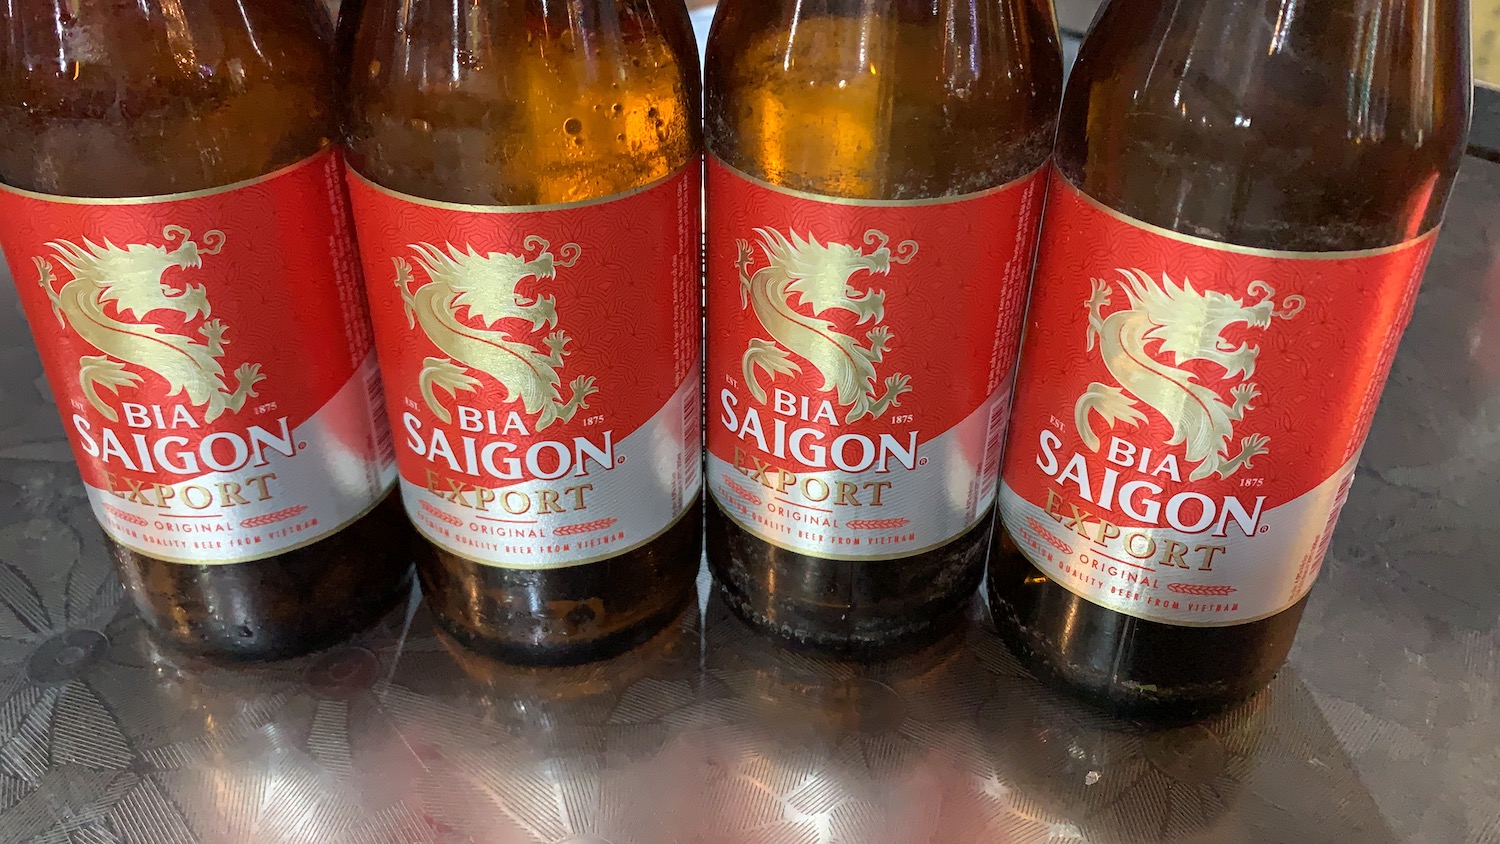 Cuatro botellas de Cerveza Saigon con etiqueta roja